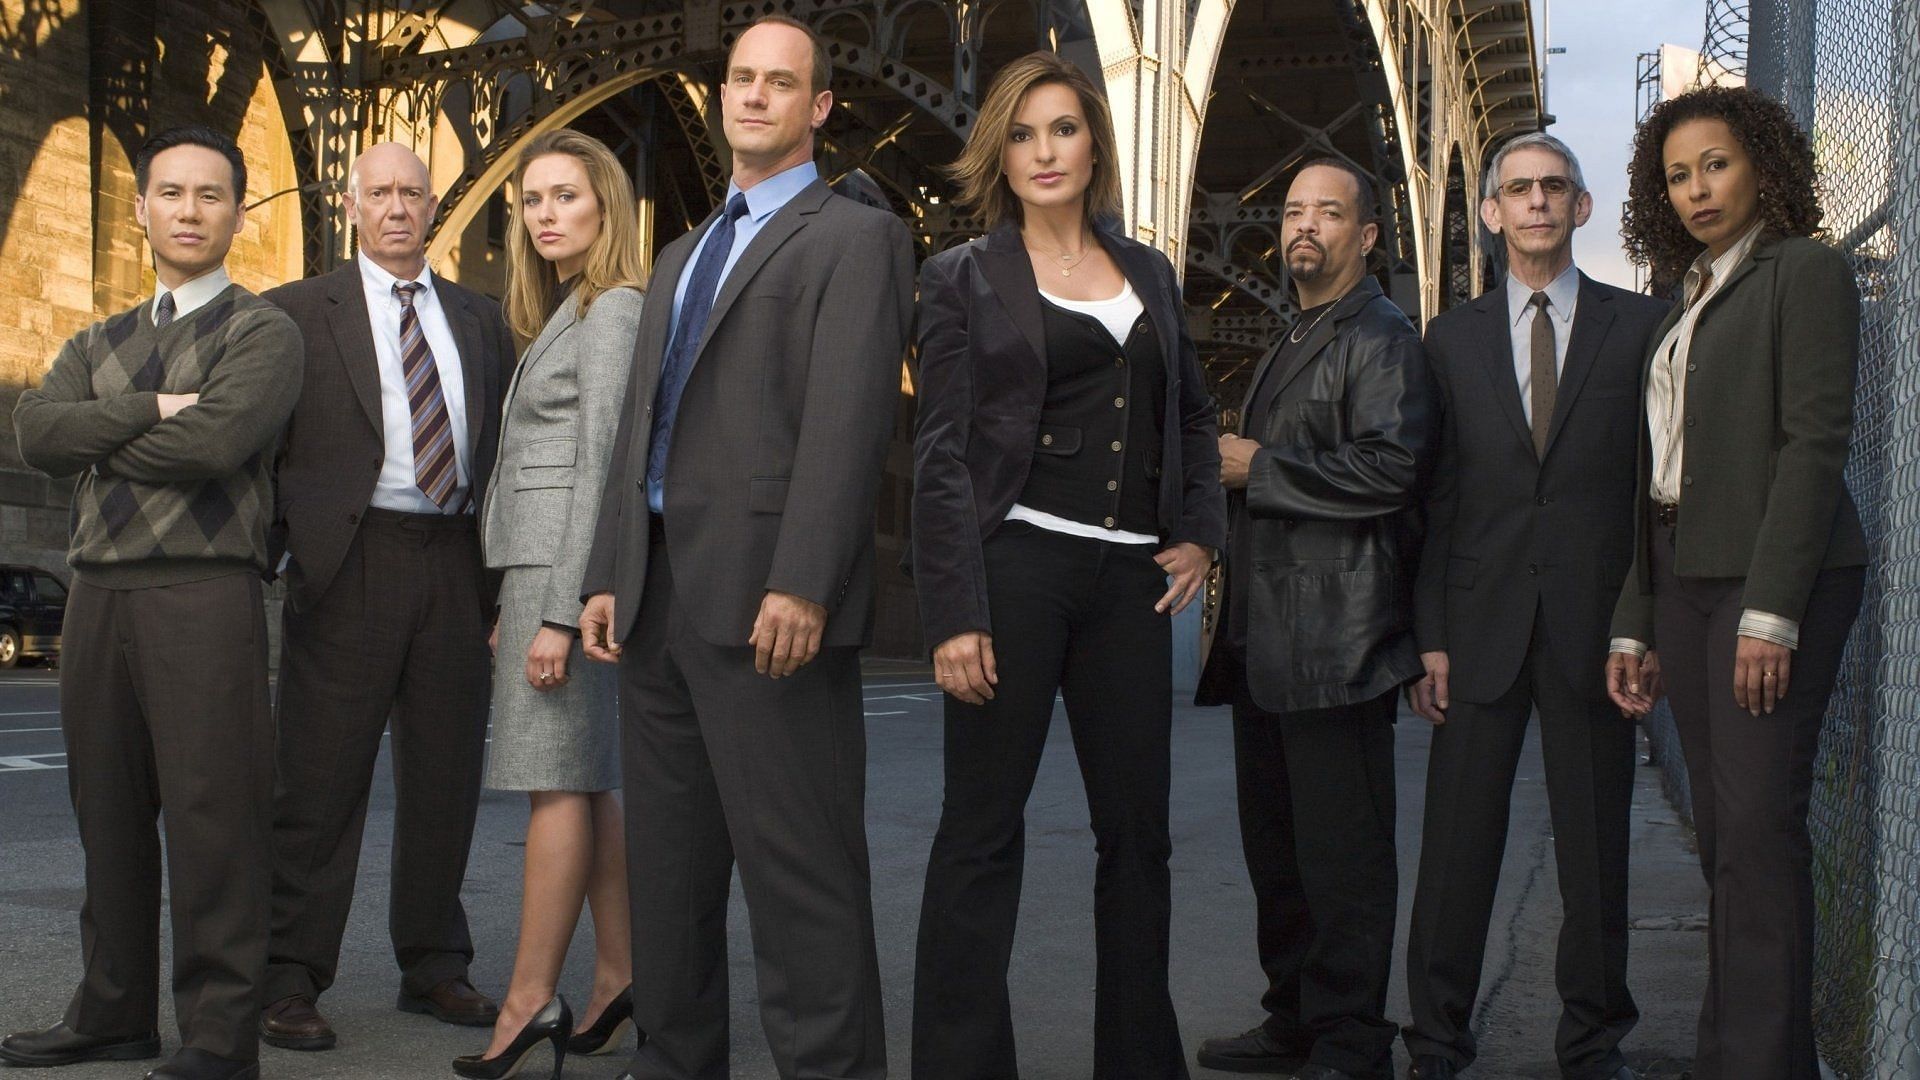 The original members of Law and Order (Image via NBC)